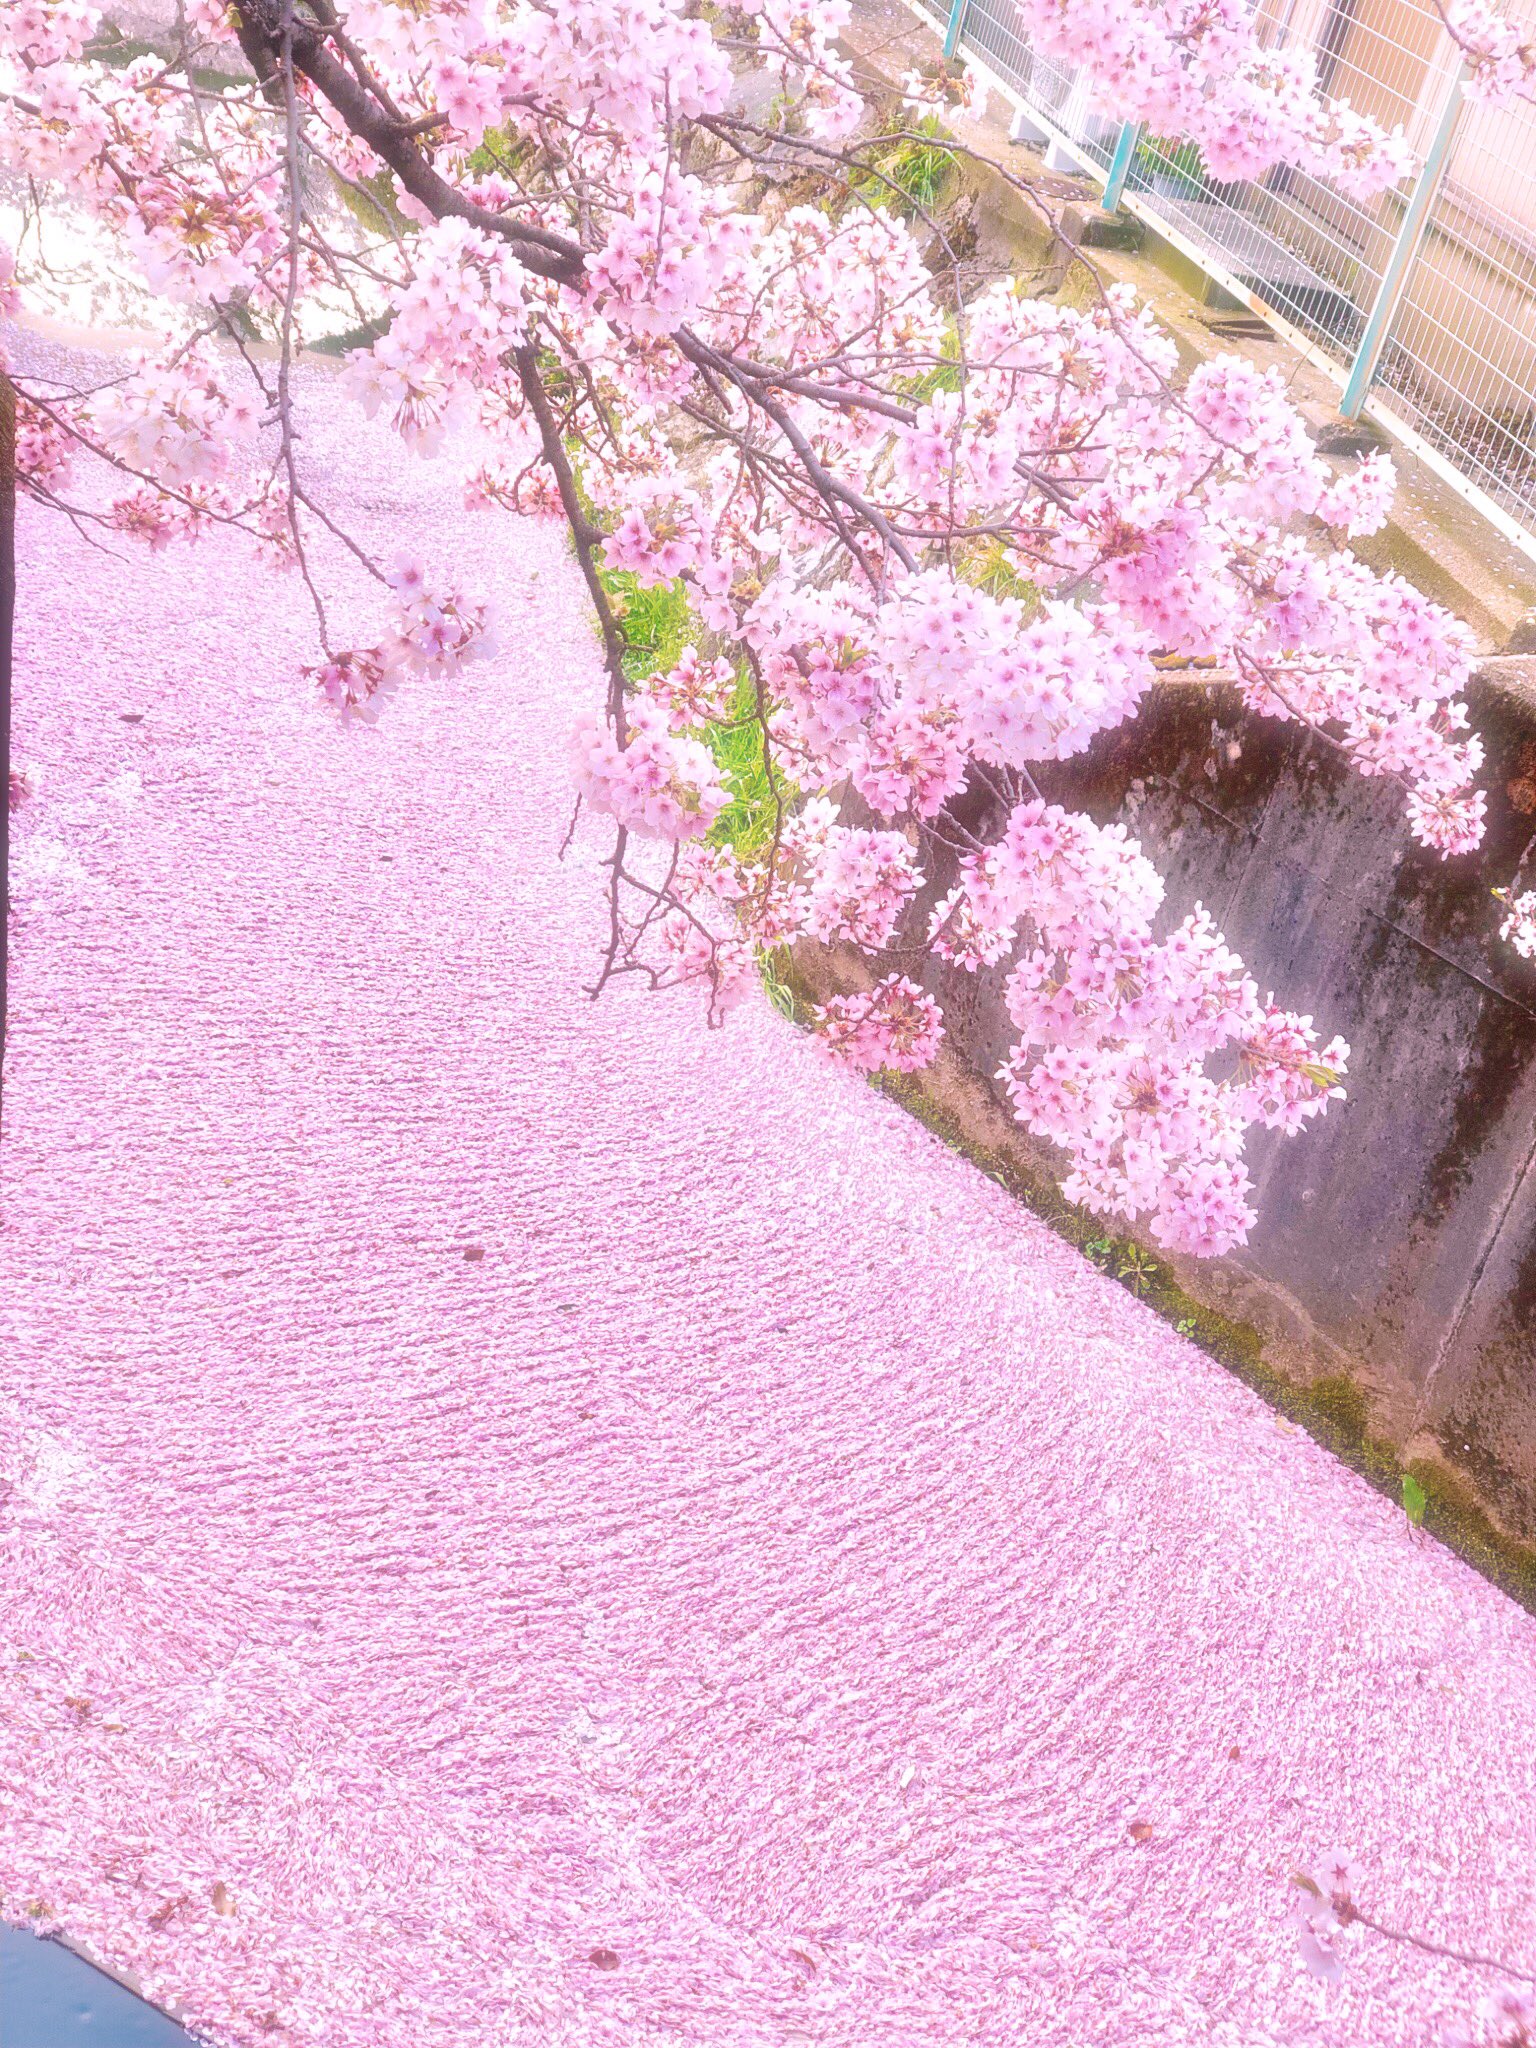 Waraku 京都 和楽 桜 花筏 桜の絨毯 朝散歩 哲学の道 タイミングよく桜の絨毯をみれました T Co 0grepblnh2 Twitter